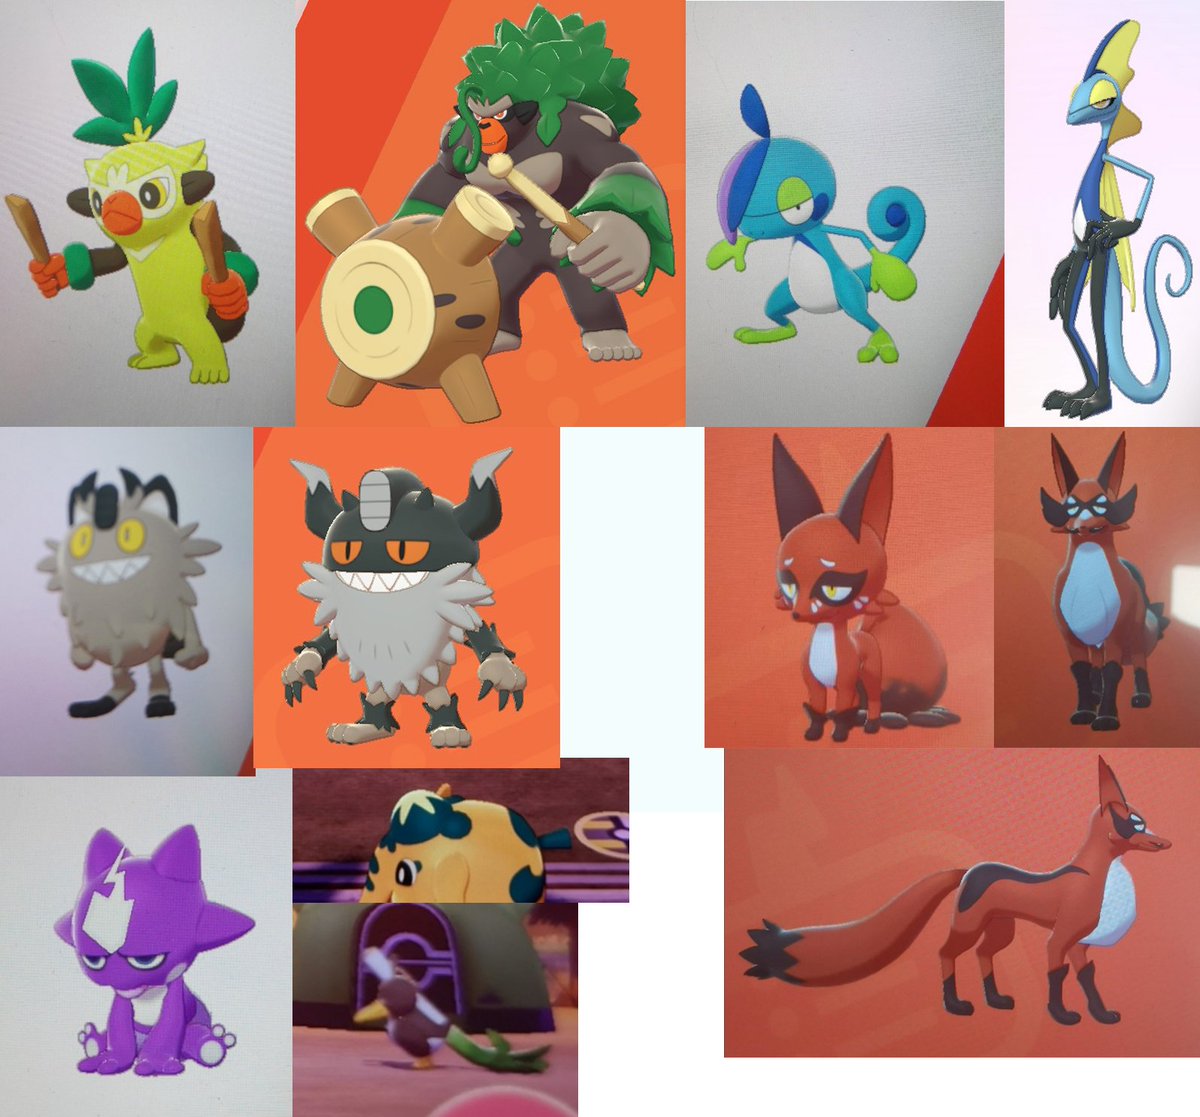 Pokémon Sword and Pokémon Shield characters and evolutions